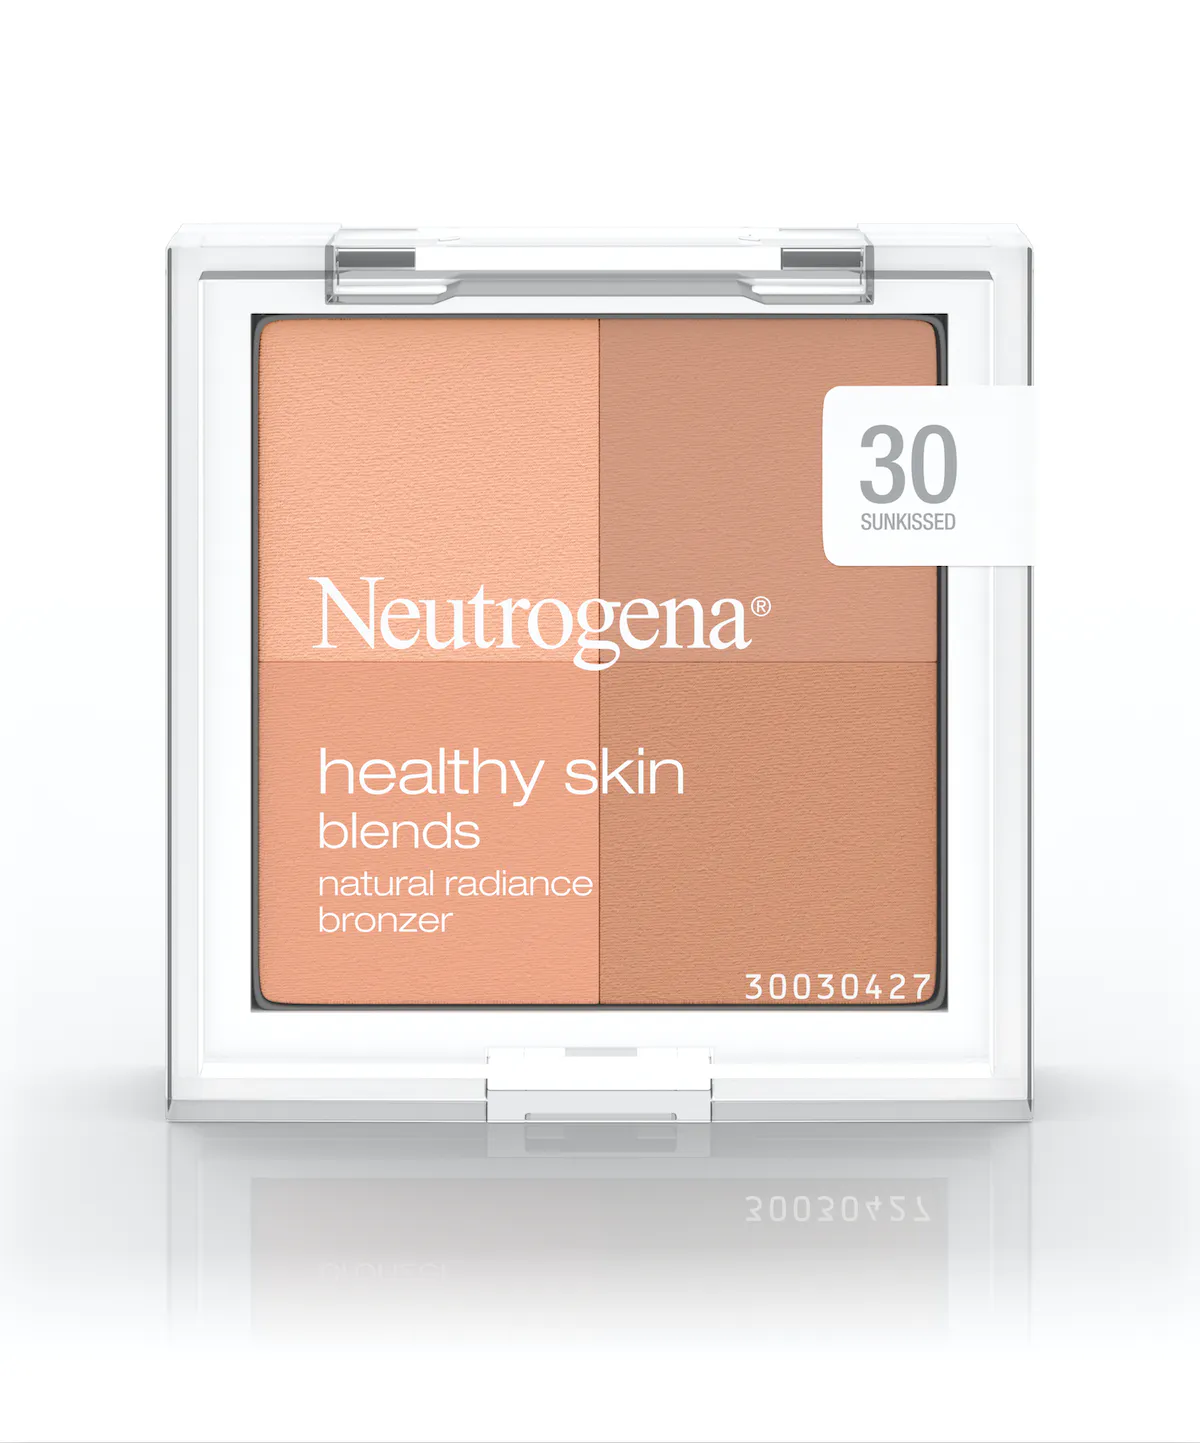 Neutrogena Healthy Skin Blends Blush Palette